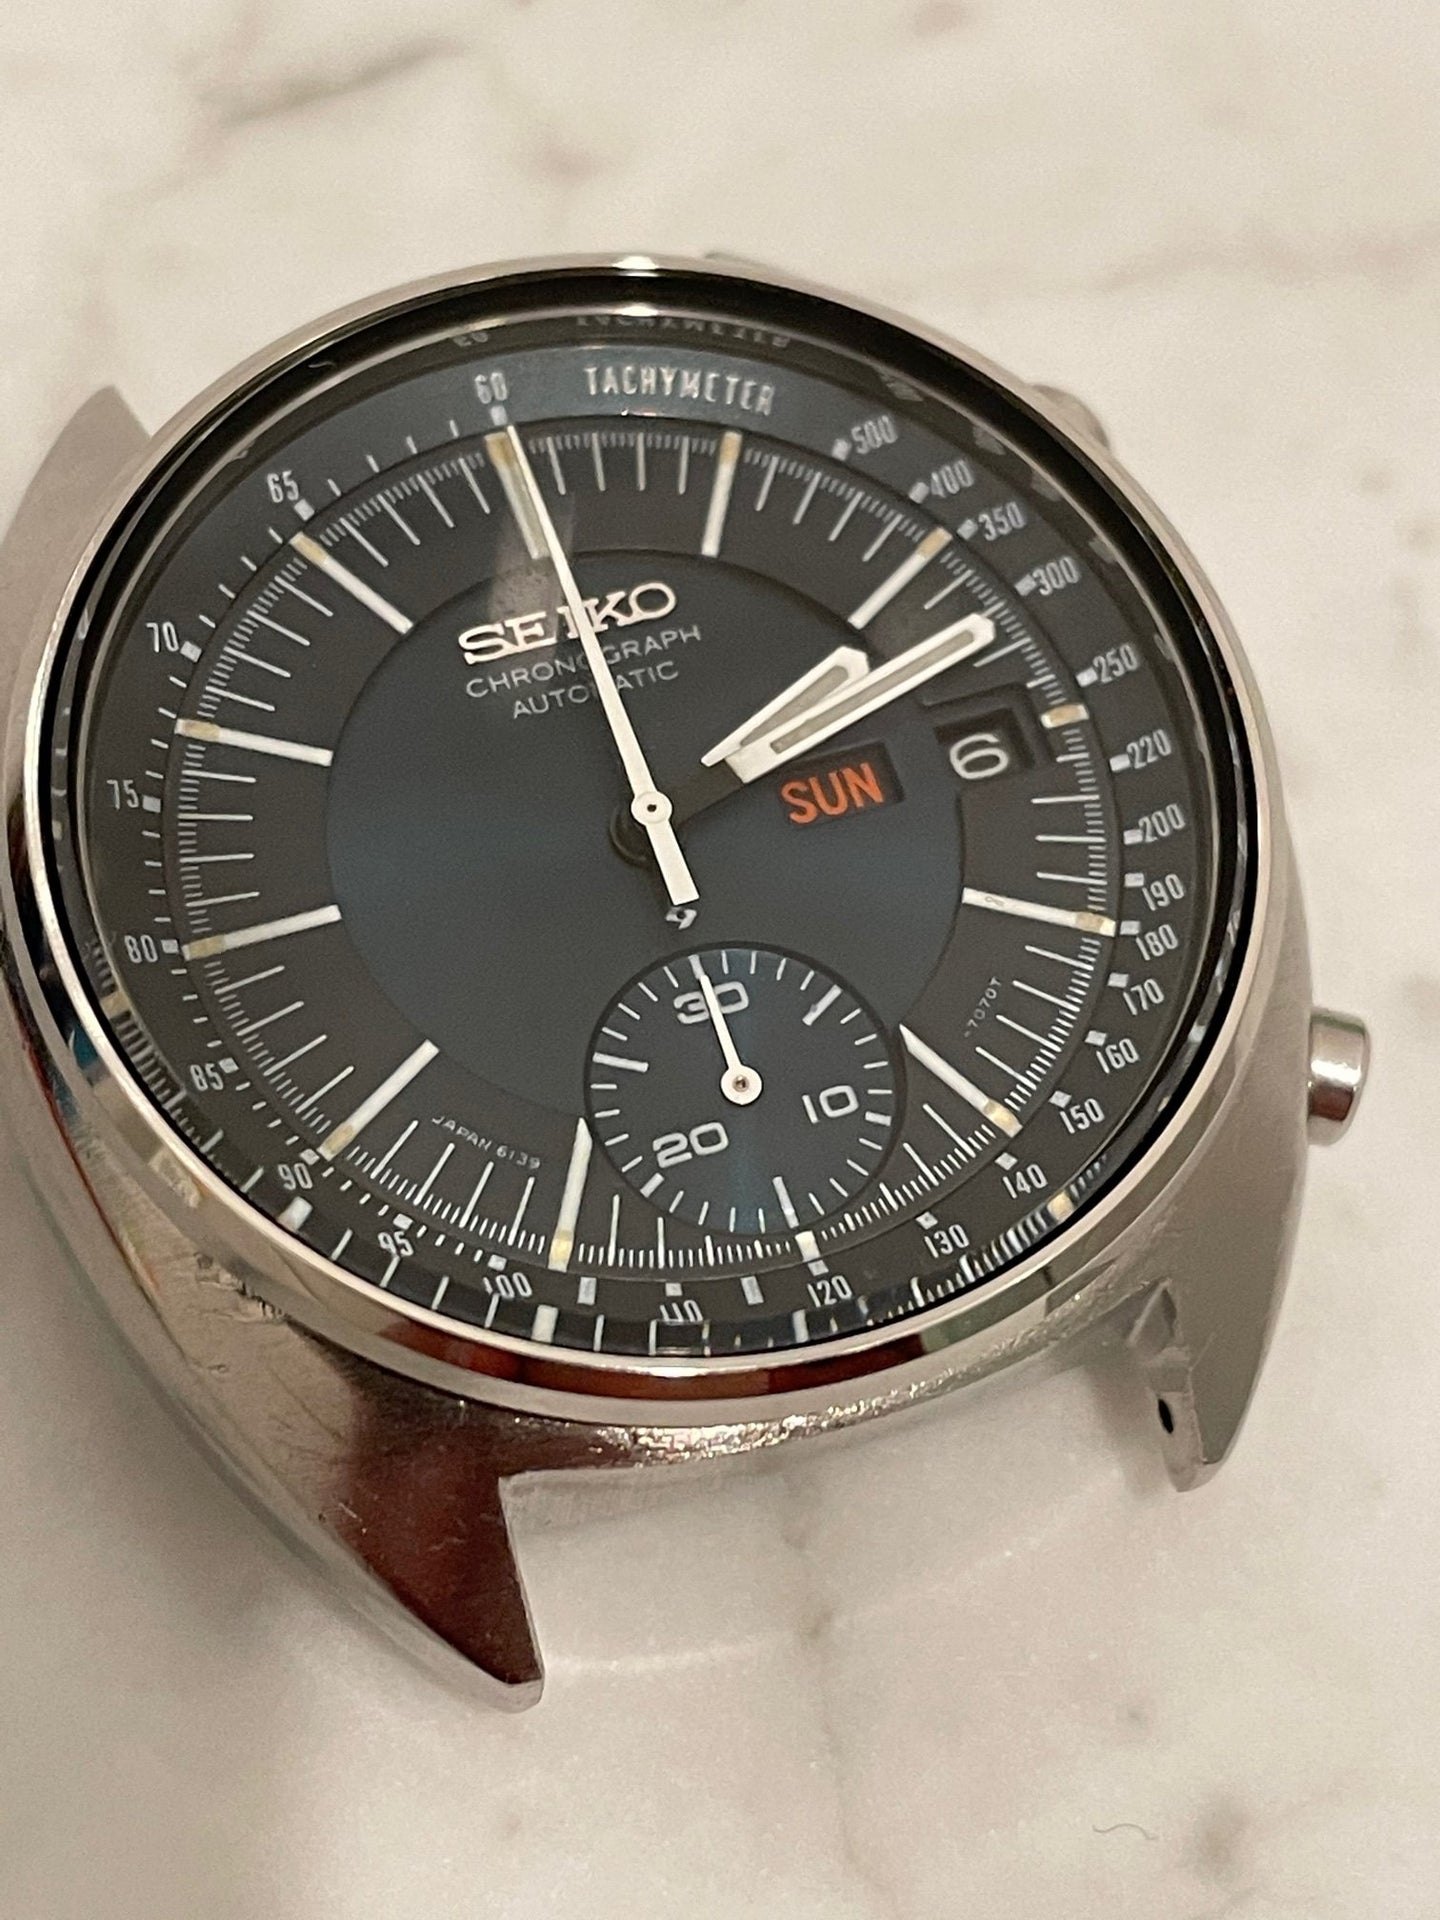 FS: 1972 Seiko 6139-7030 Automatic Chronograph “Speedy” - Hub City Vintage  - $650 | WatchUSeek Watch Forums